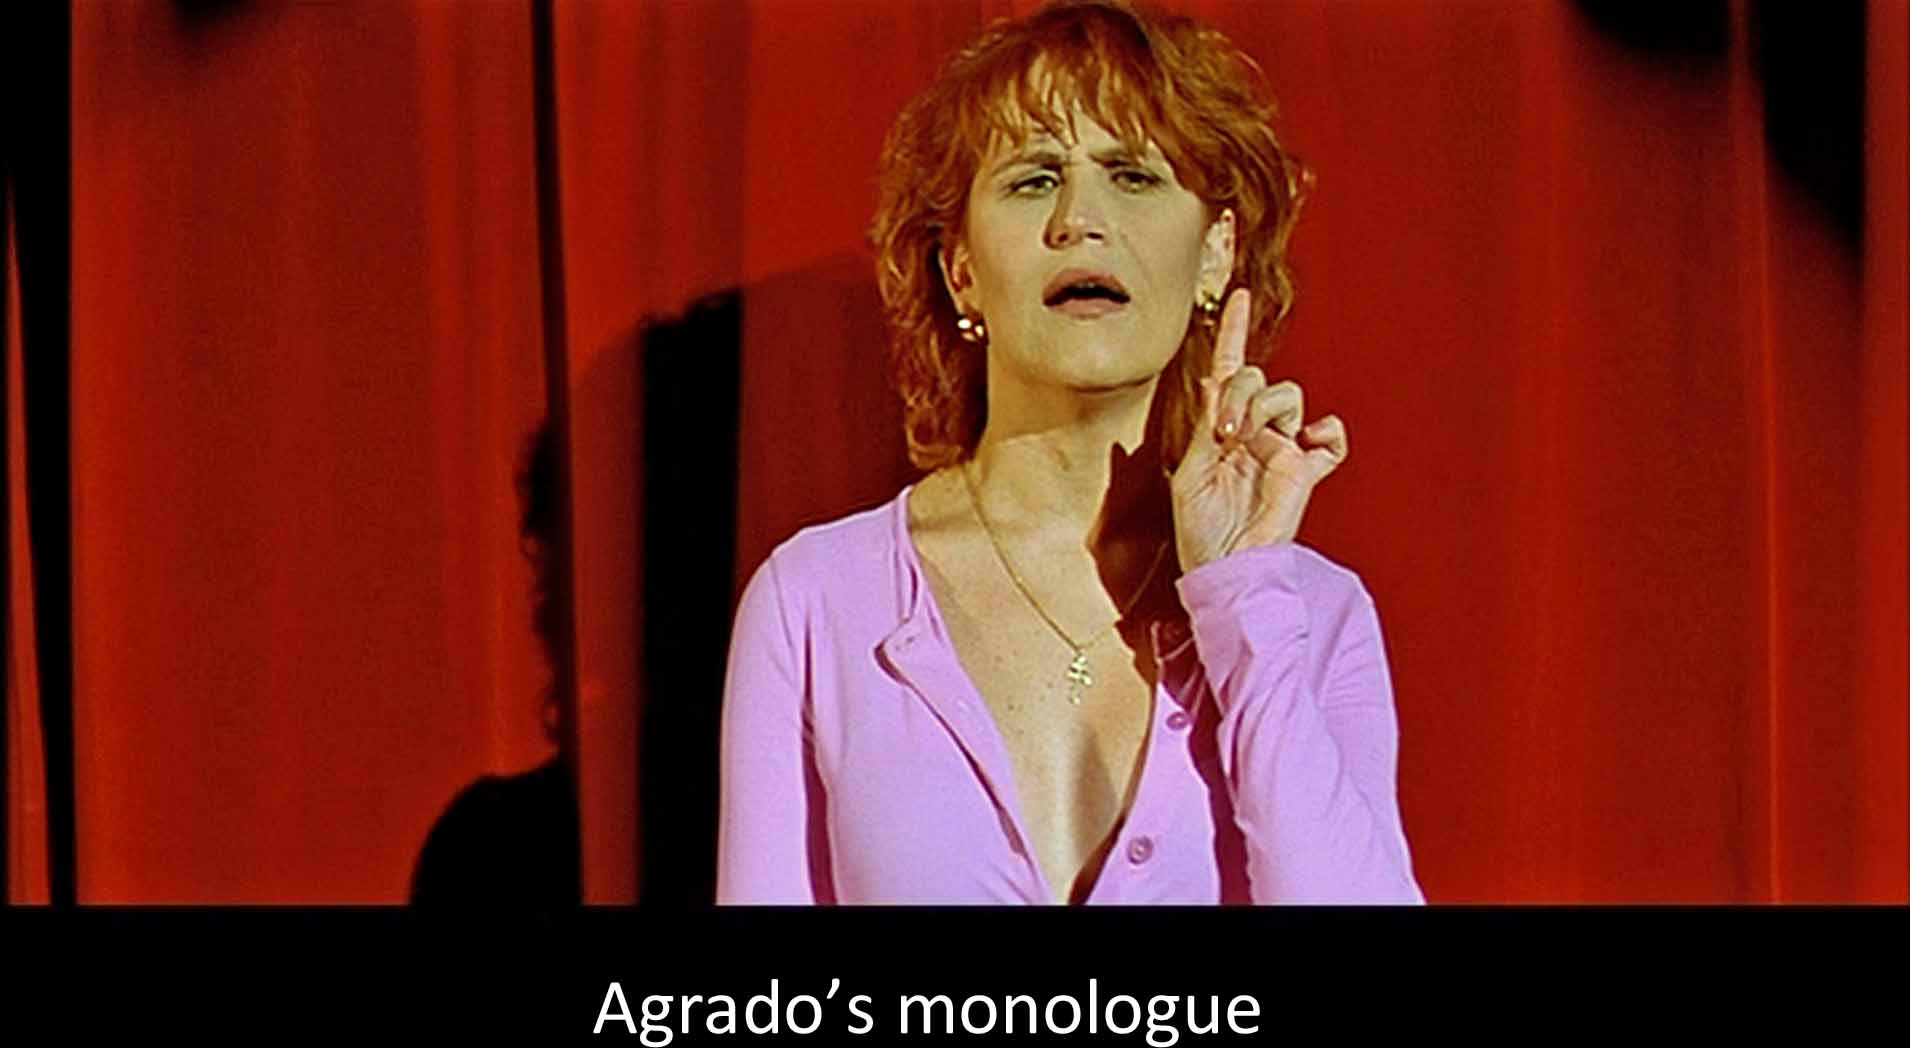 Agrado's monologue